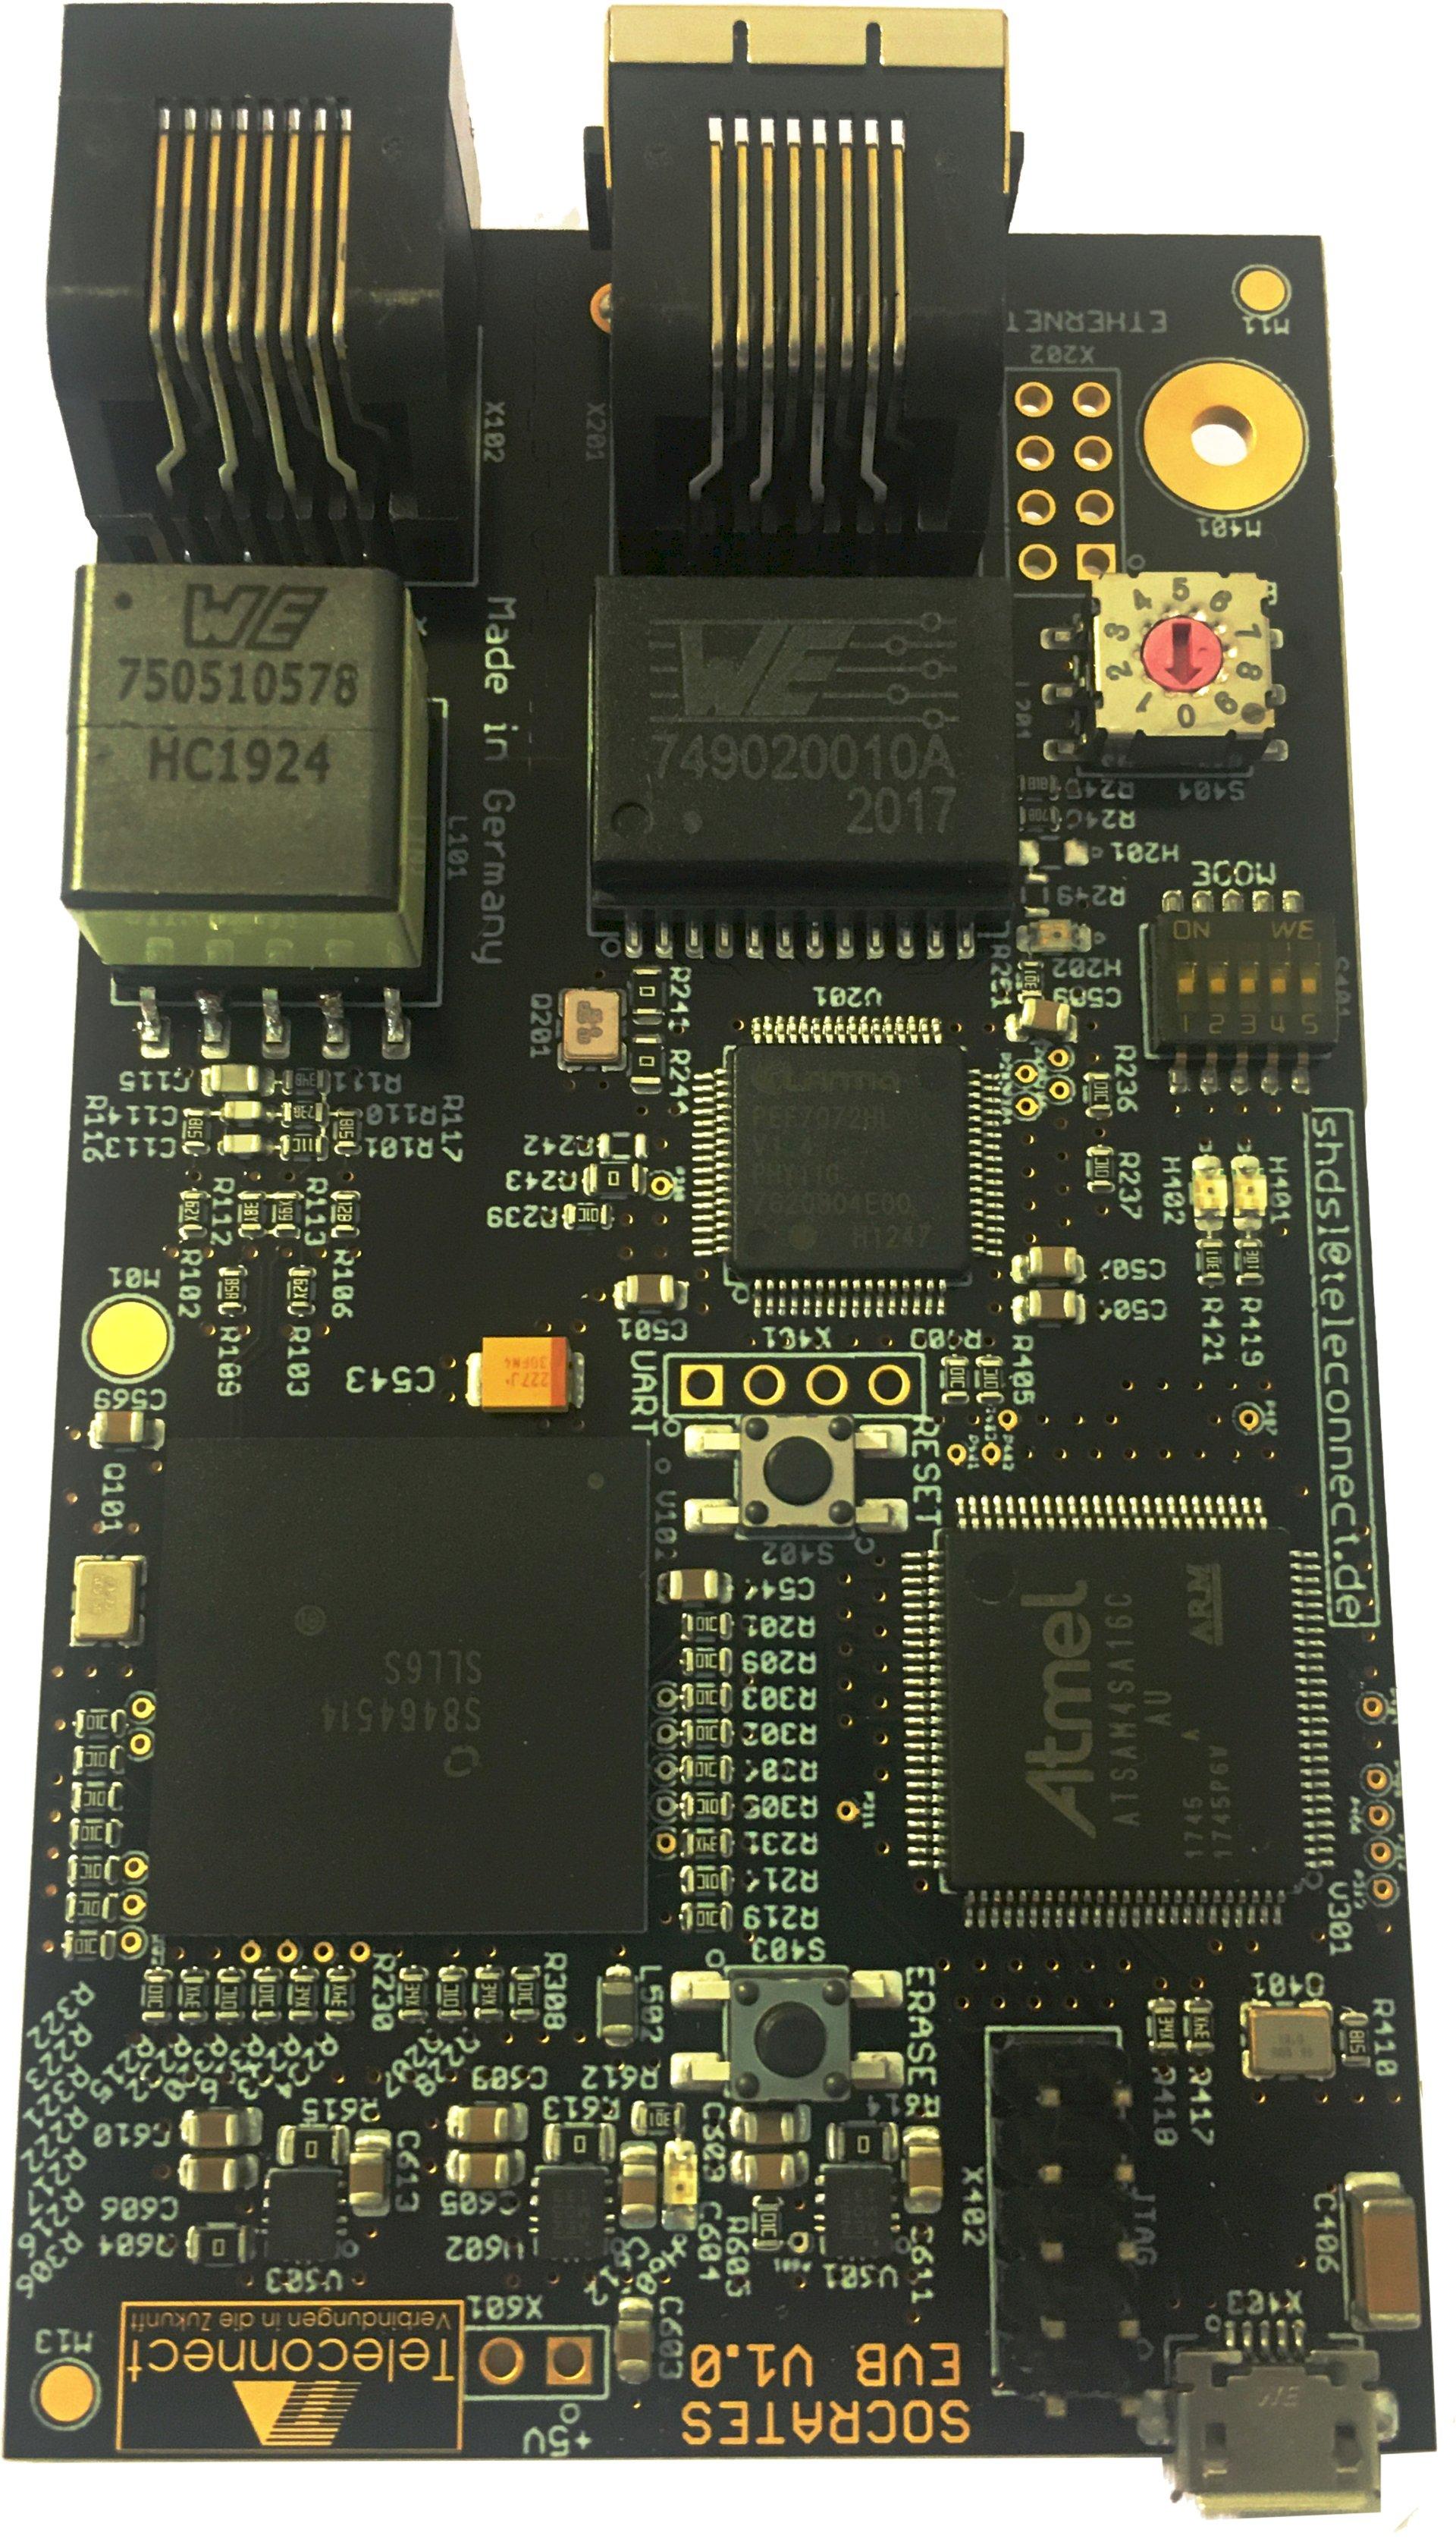 Würth Elektronik offers Intel SHDSL Evaluation Kit